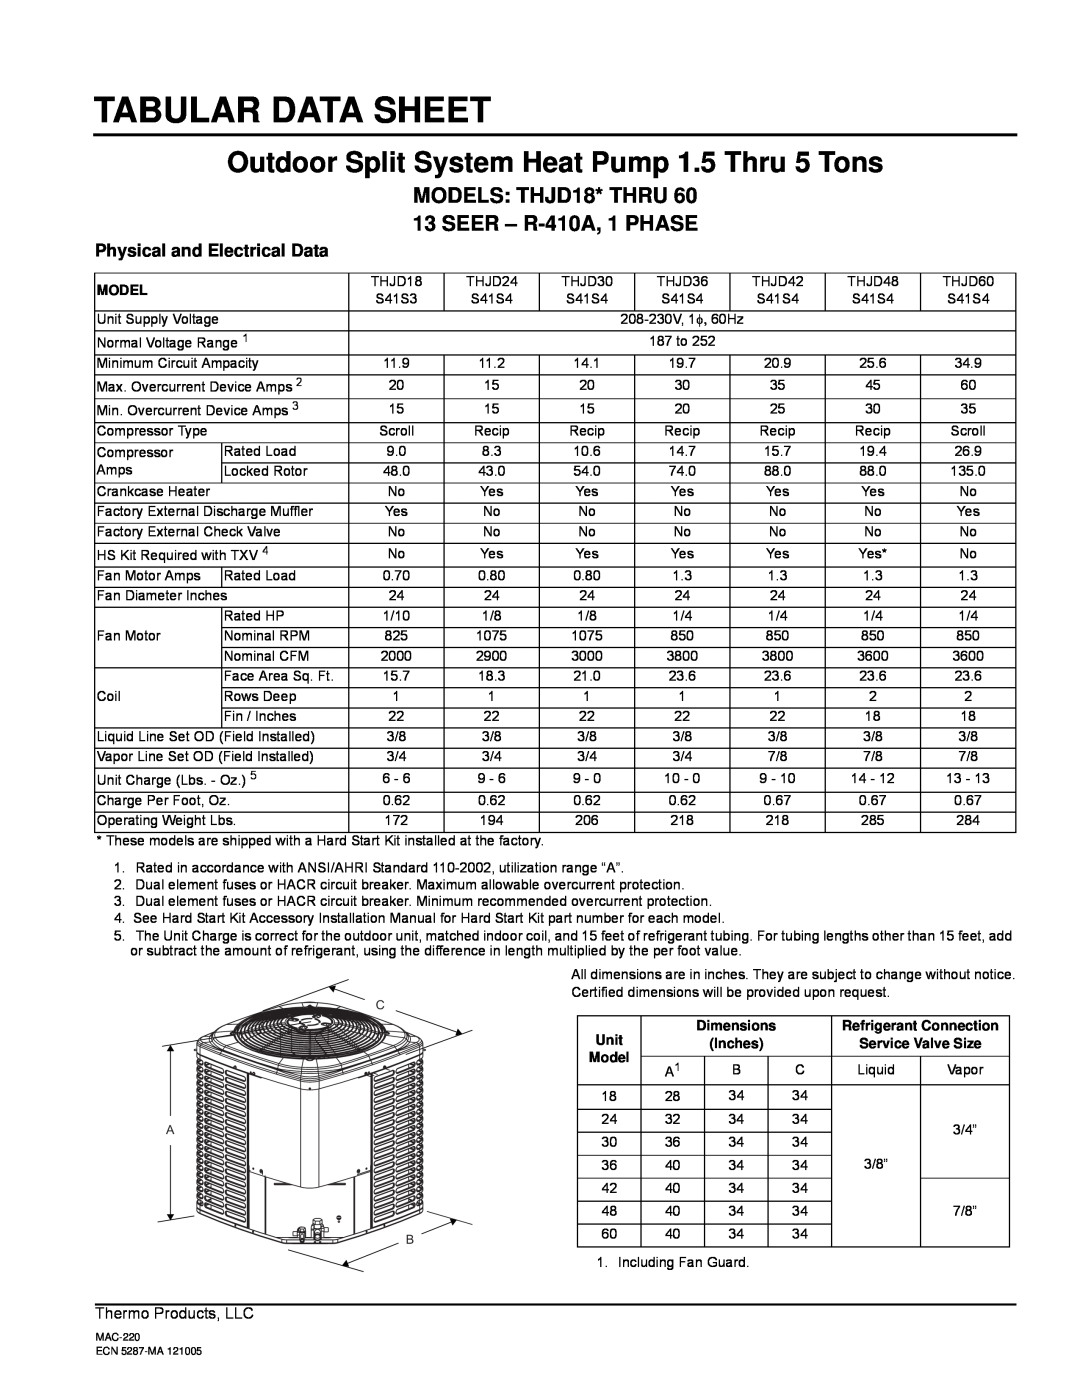 Thermo Products thjd18 dimensions Model, Unit, Tabular Data Sheet, Outdoor Split System Heat Pump 1.5 Thru 5 Tons 